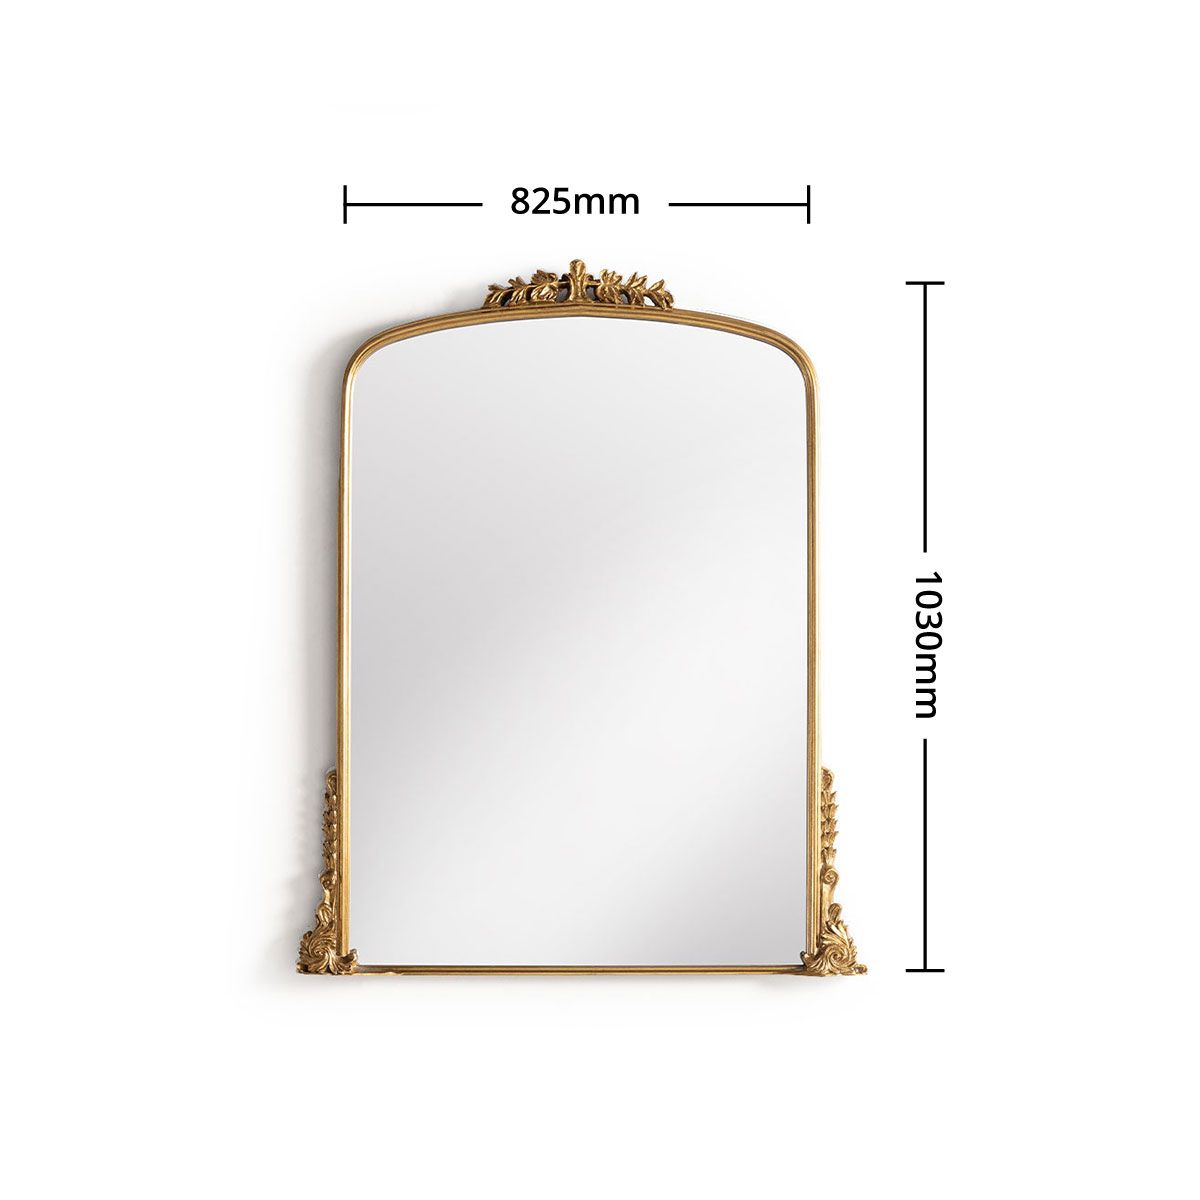 Block & Chisel rectangular standing mirror with black frame